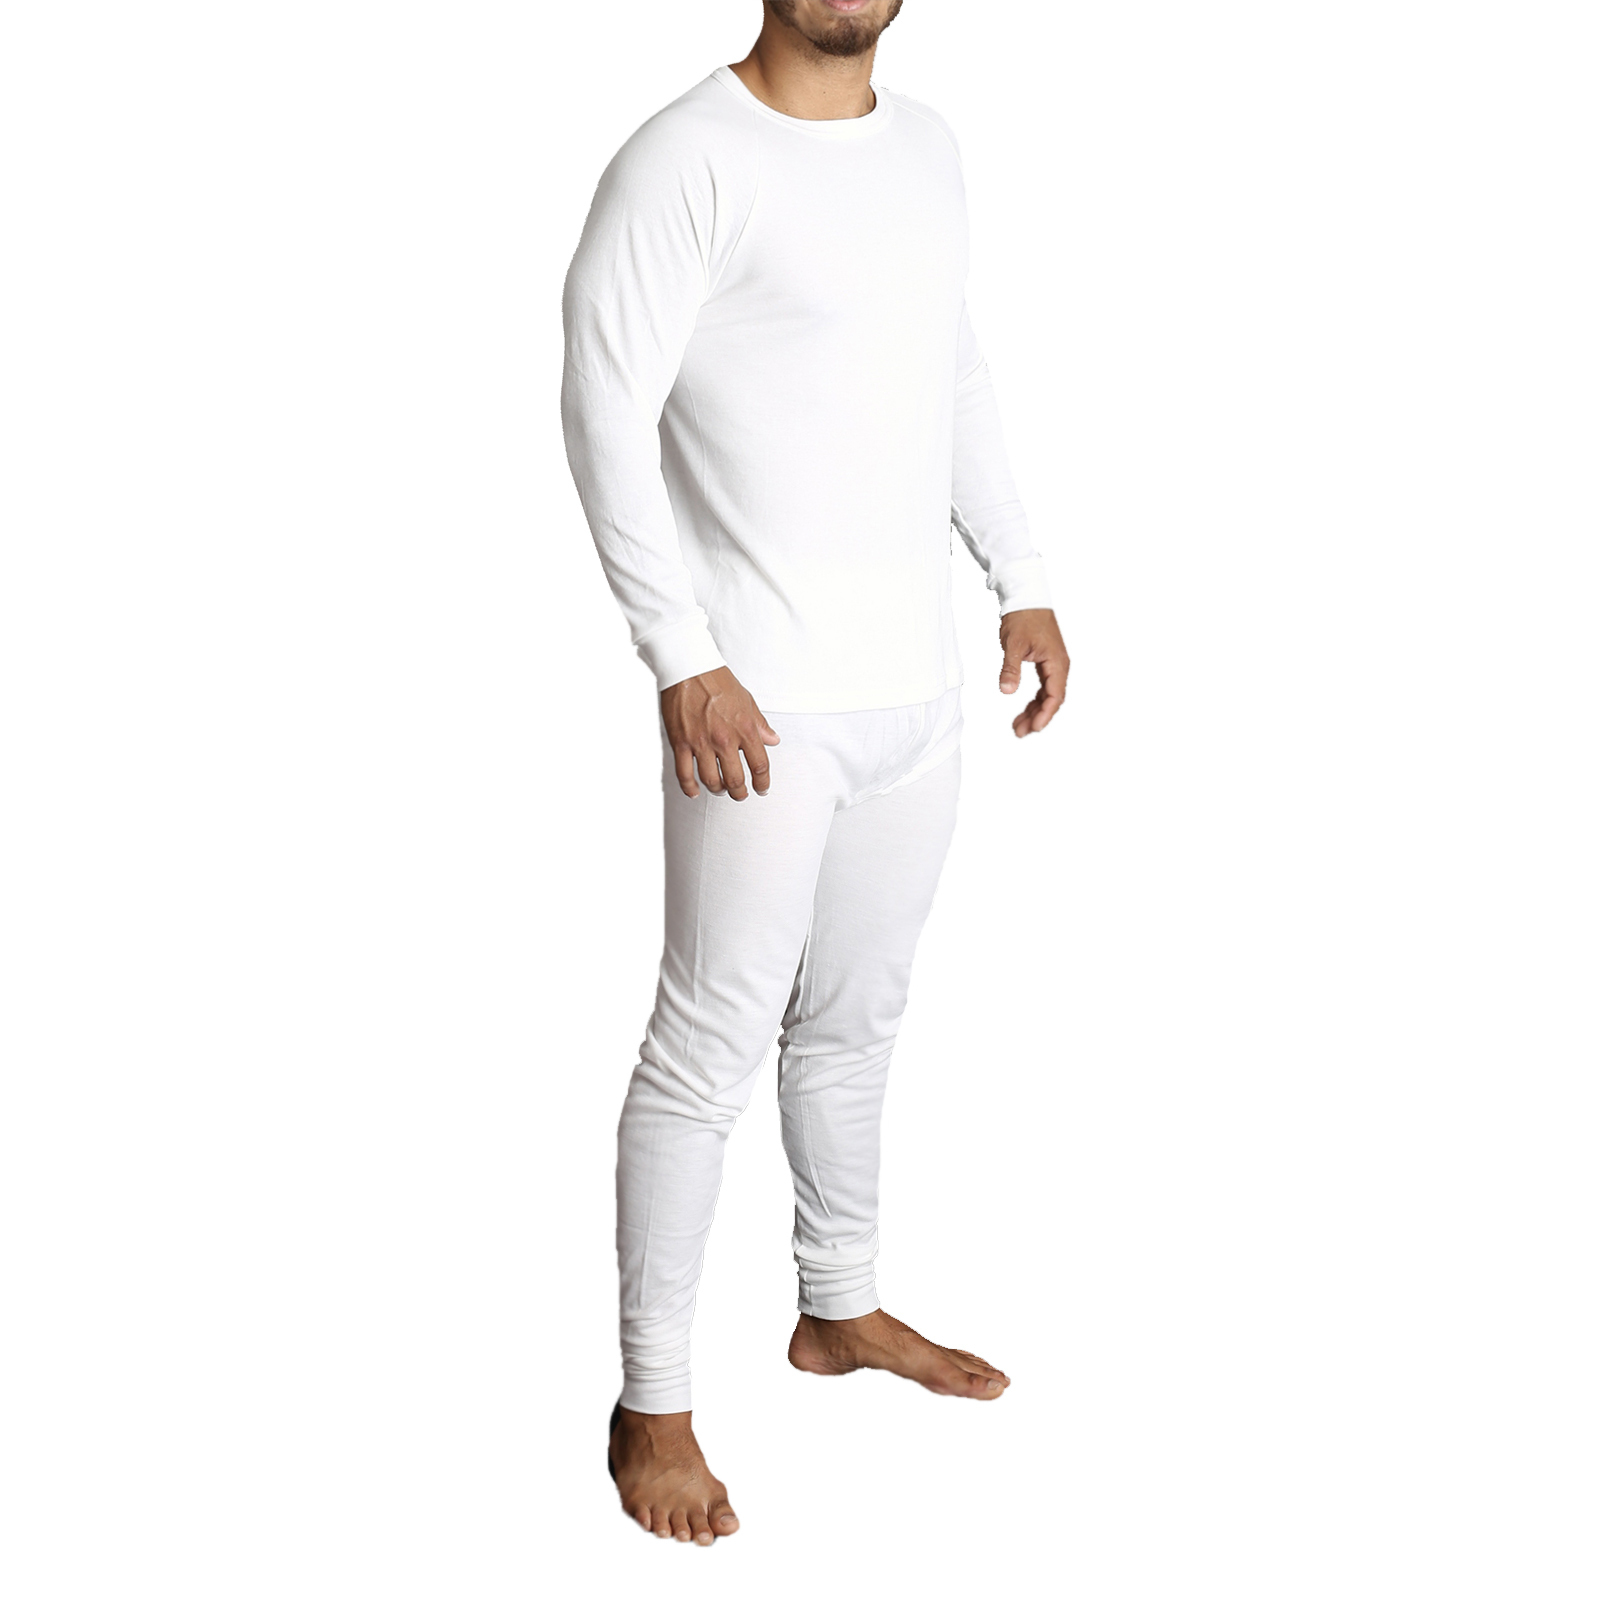 2pcs Set Men's Merino Wool Long Sleeve Thermal Top & Long Johns Pants ...